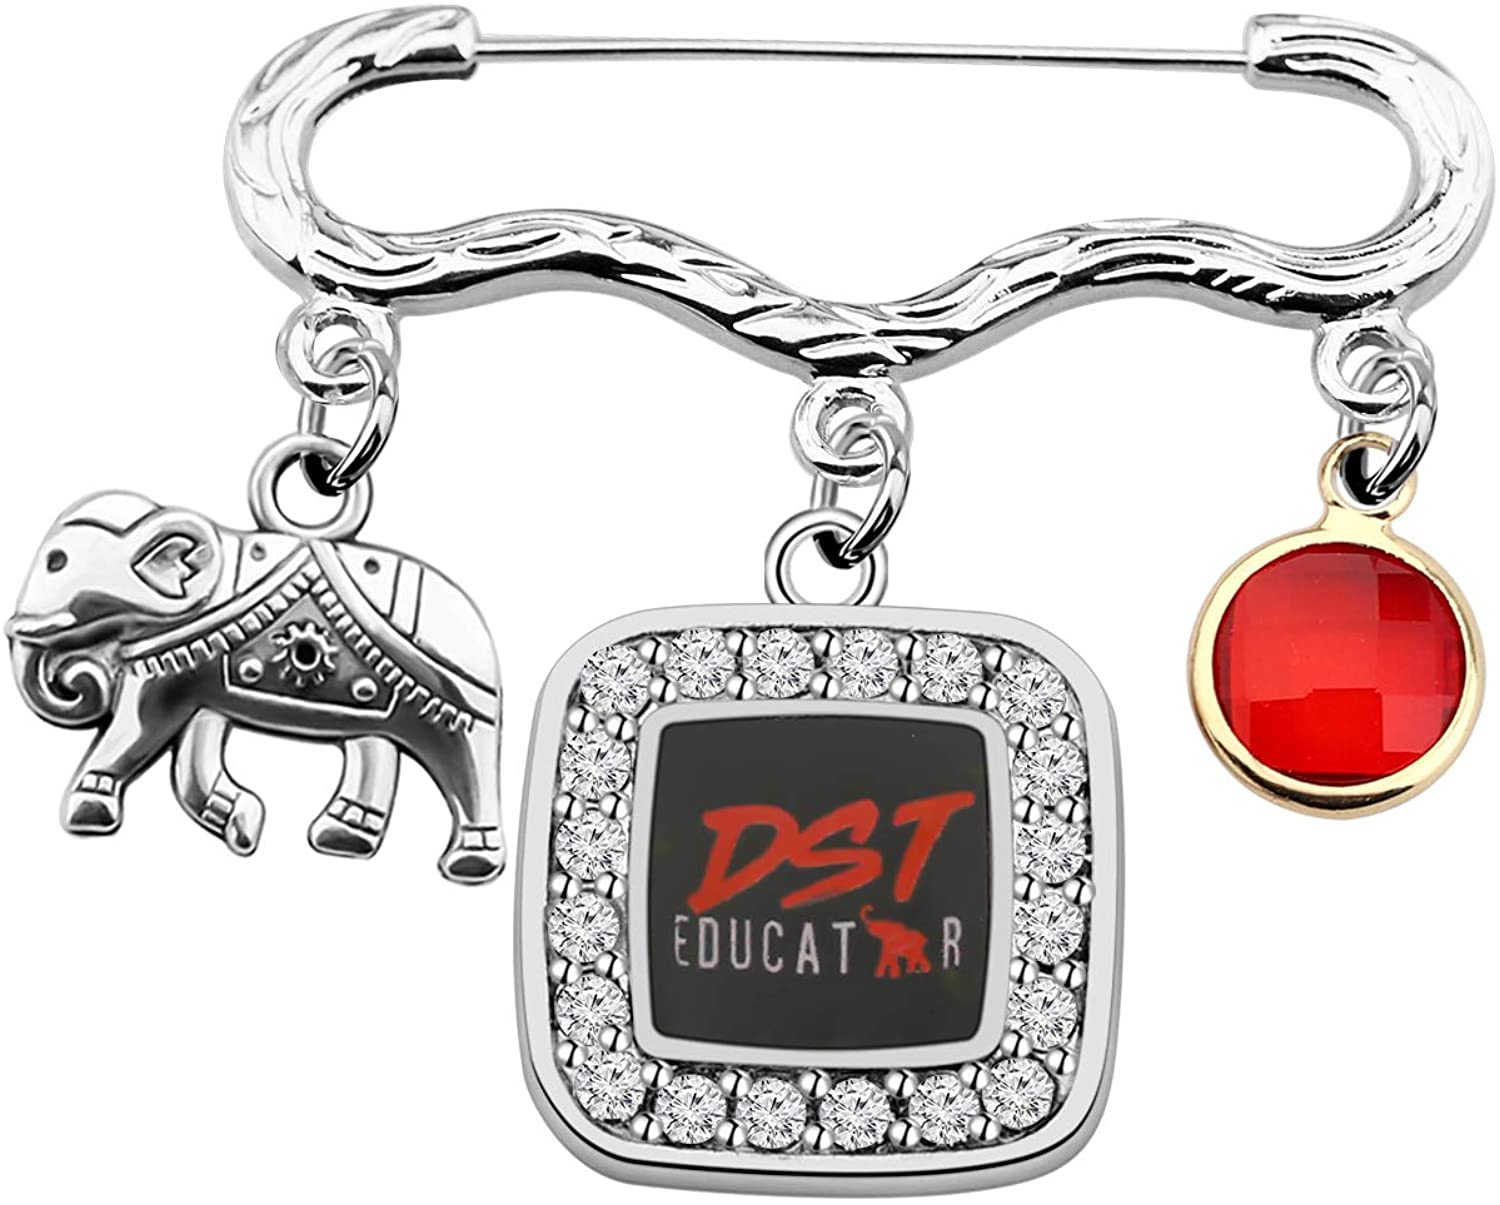 POTIY DST Cuff Bracelet DST Sorority Gift DST Sorority Jewelry Greek Sorority Gift for Sorority Women Girls